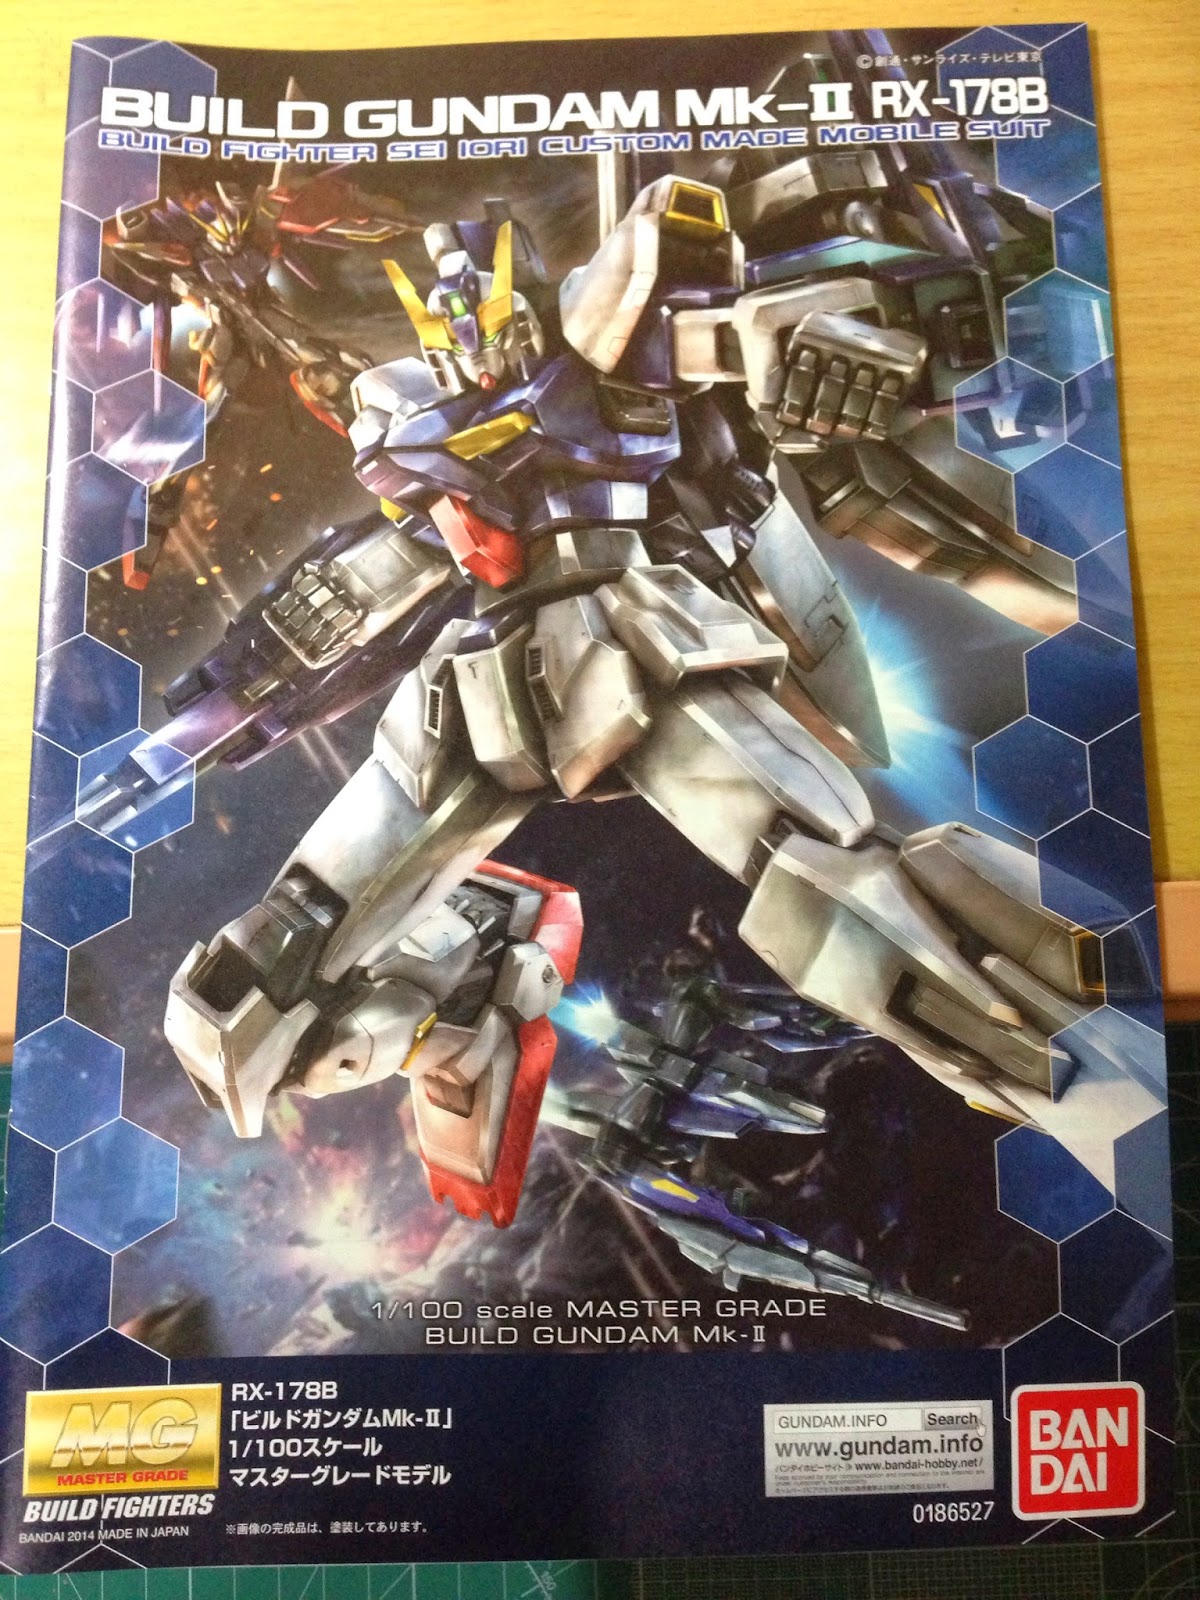 My Gundam Experience: [Completed][MG] Build Gundam Mk-II Build Fighter ...